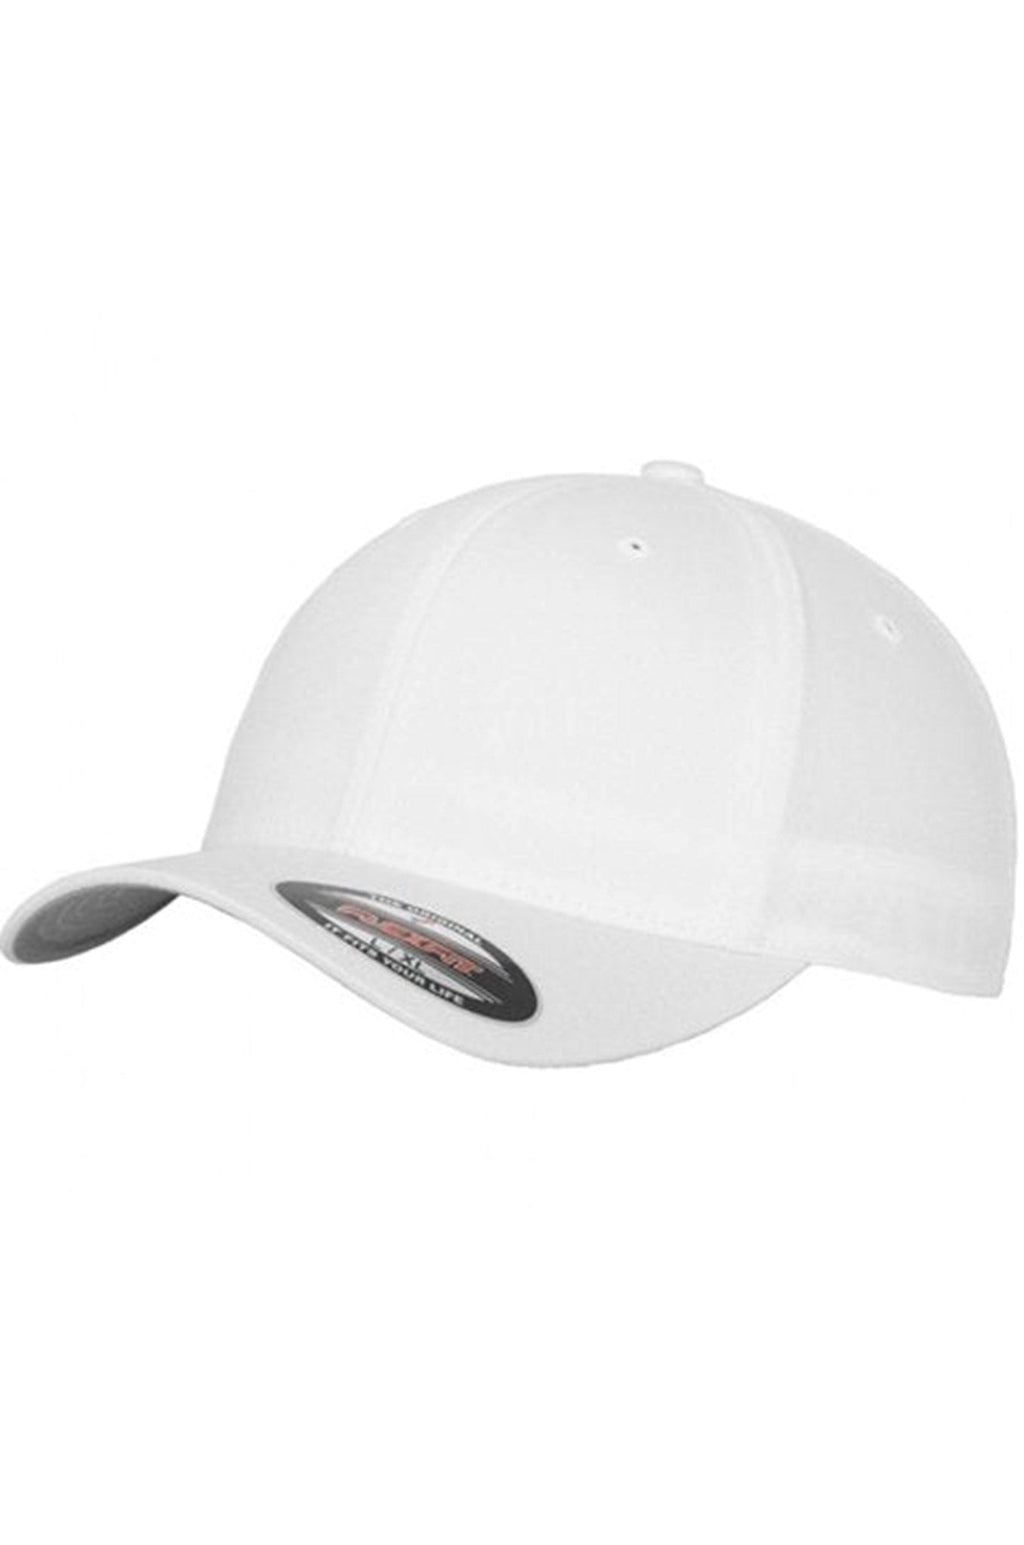 FlexFit Original Baseball Cap - White